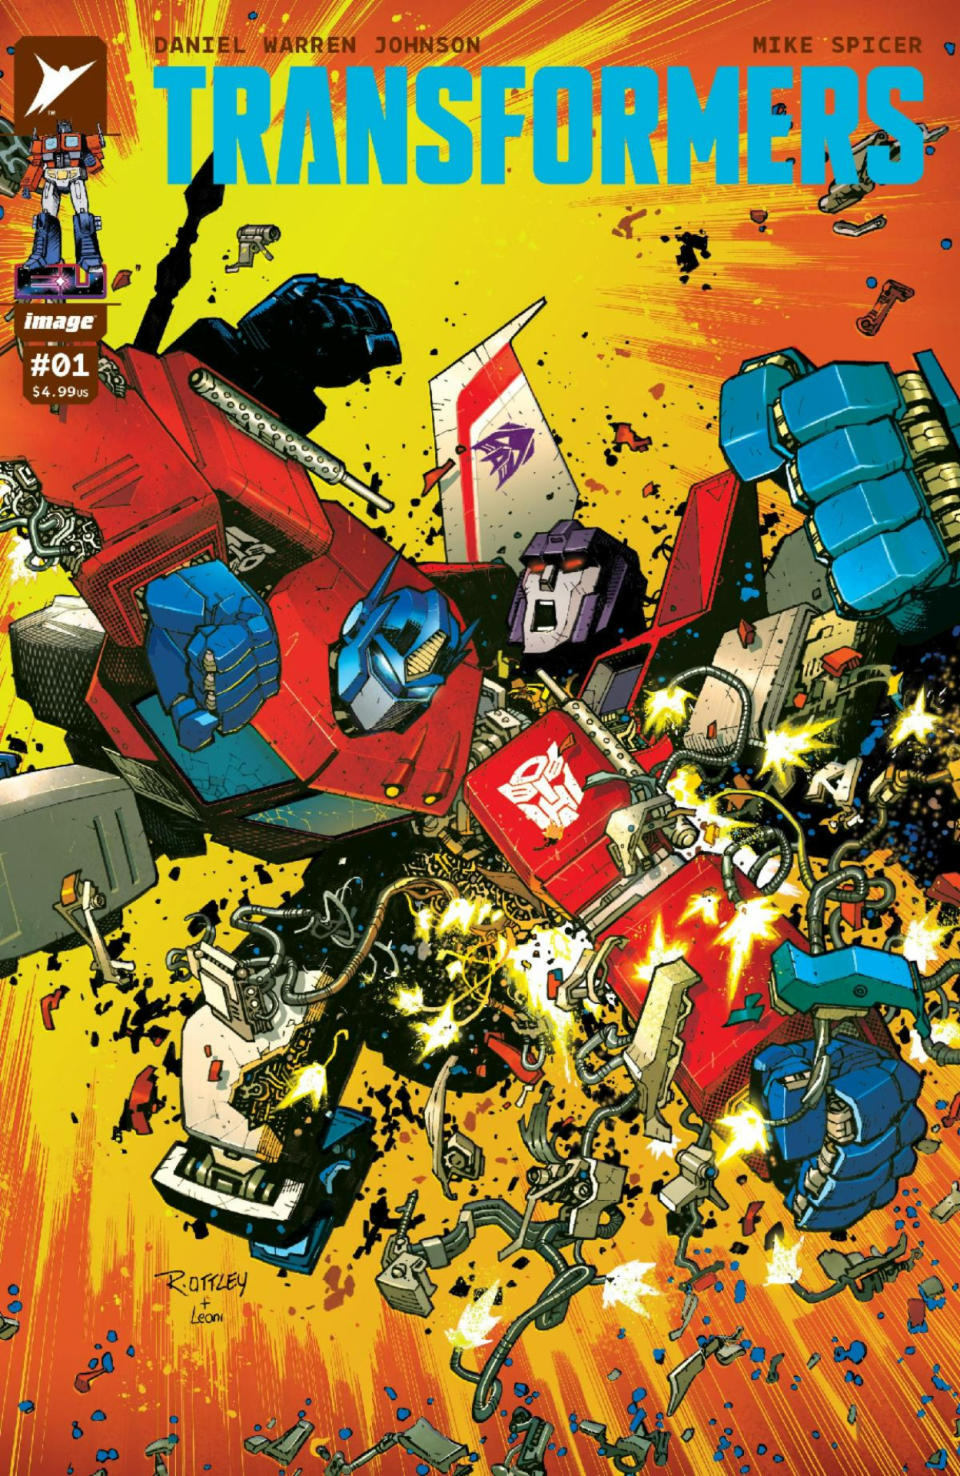 Transformers #1 cover art